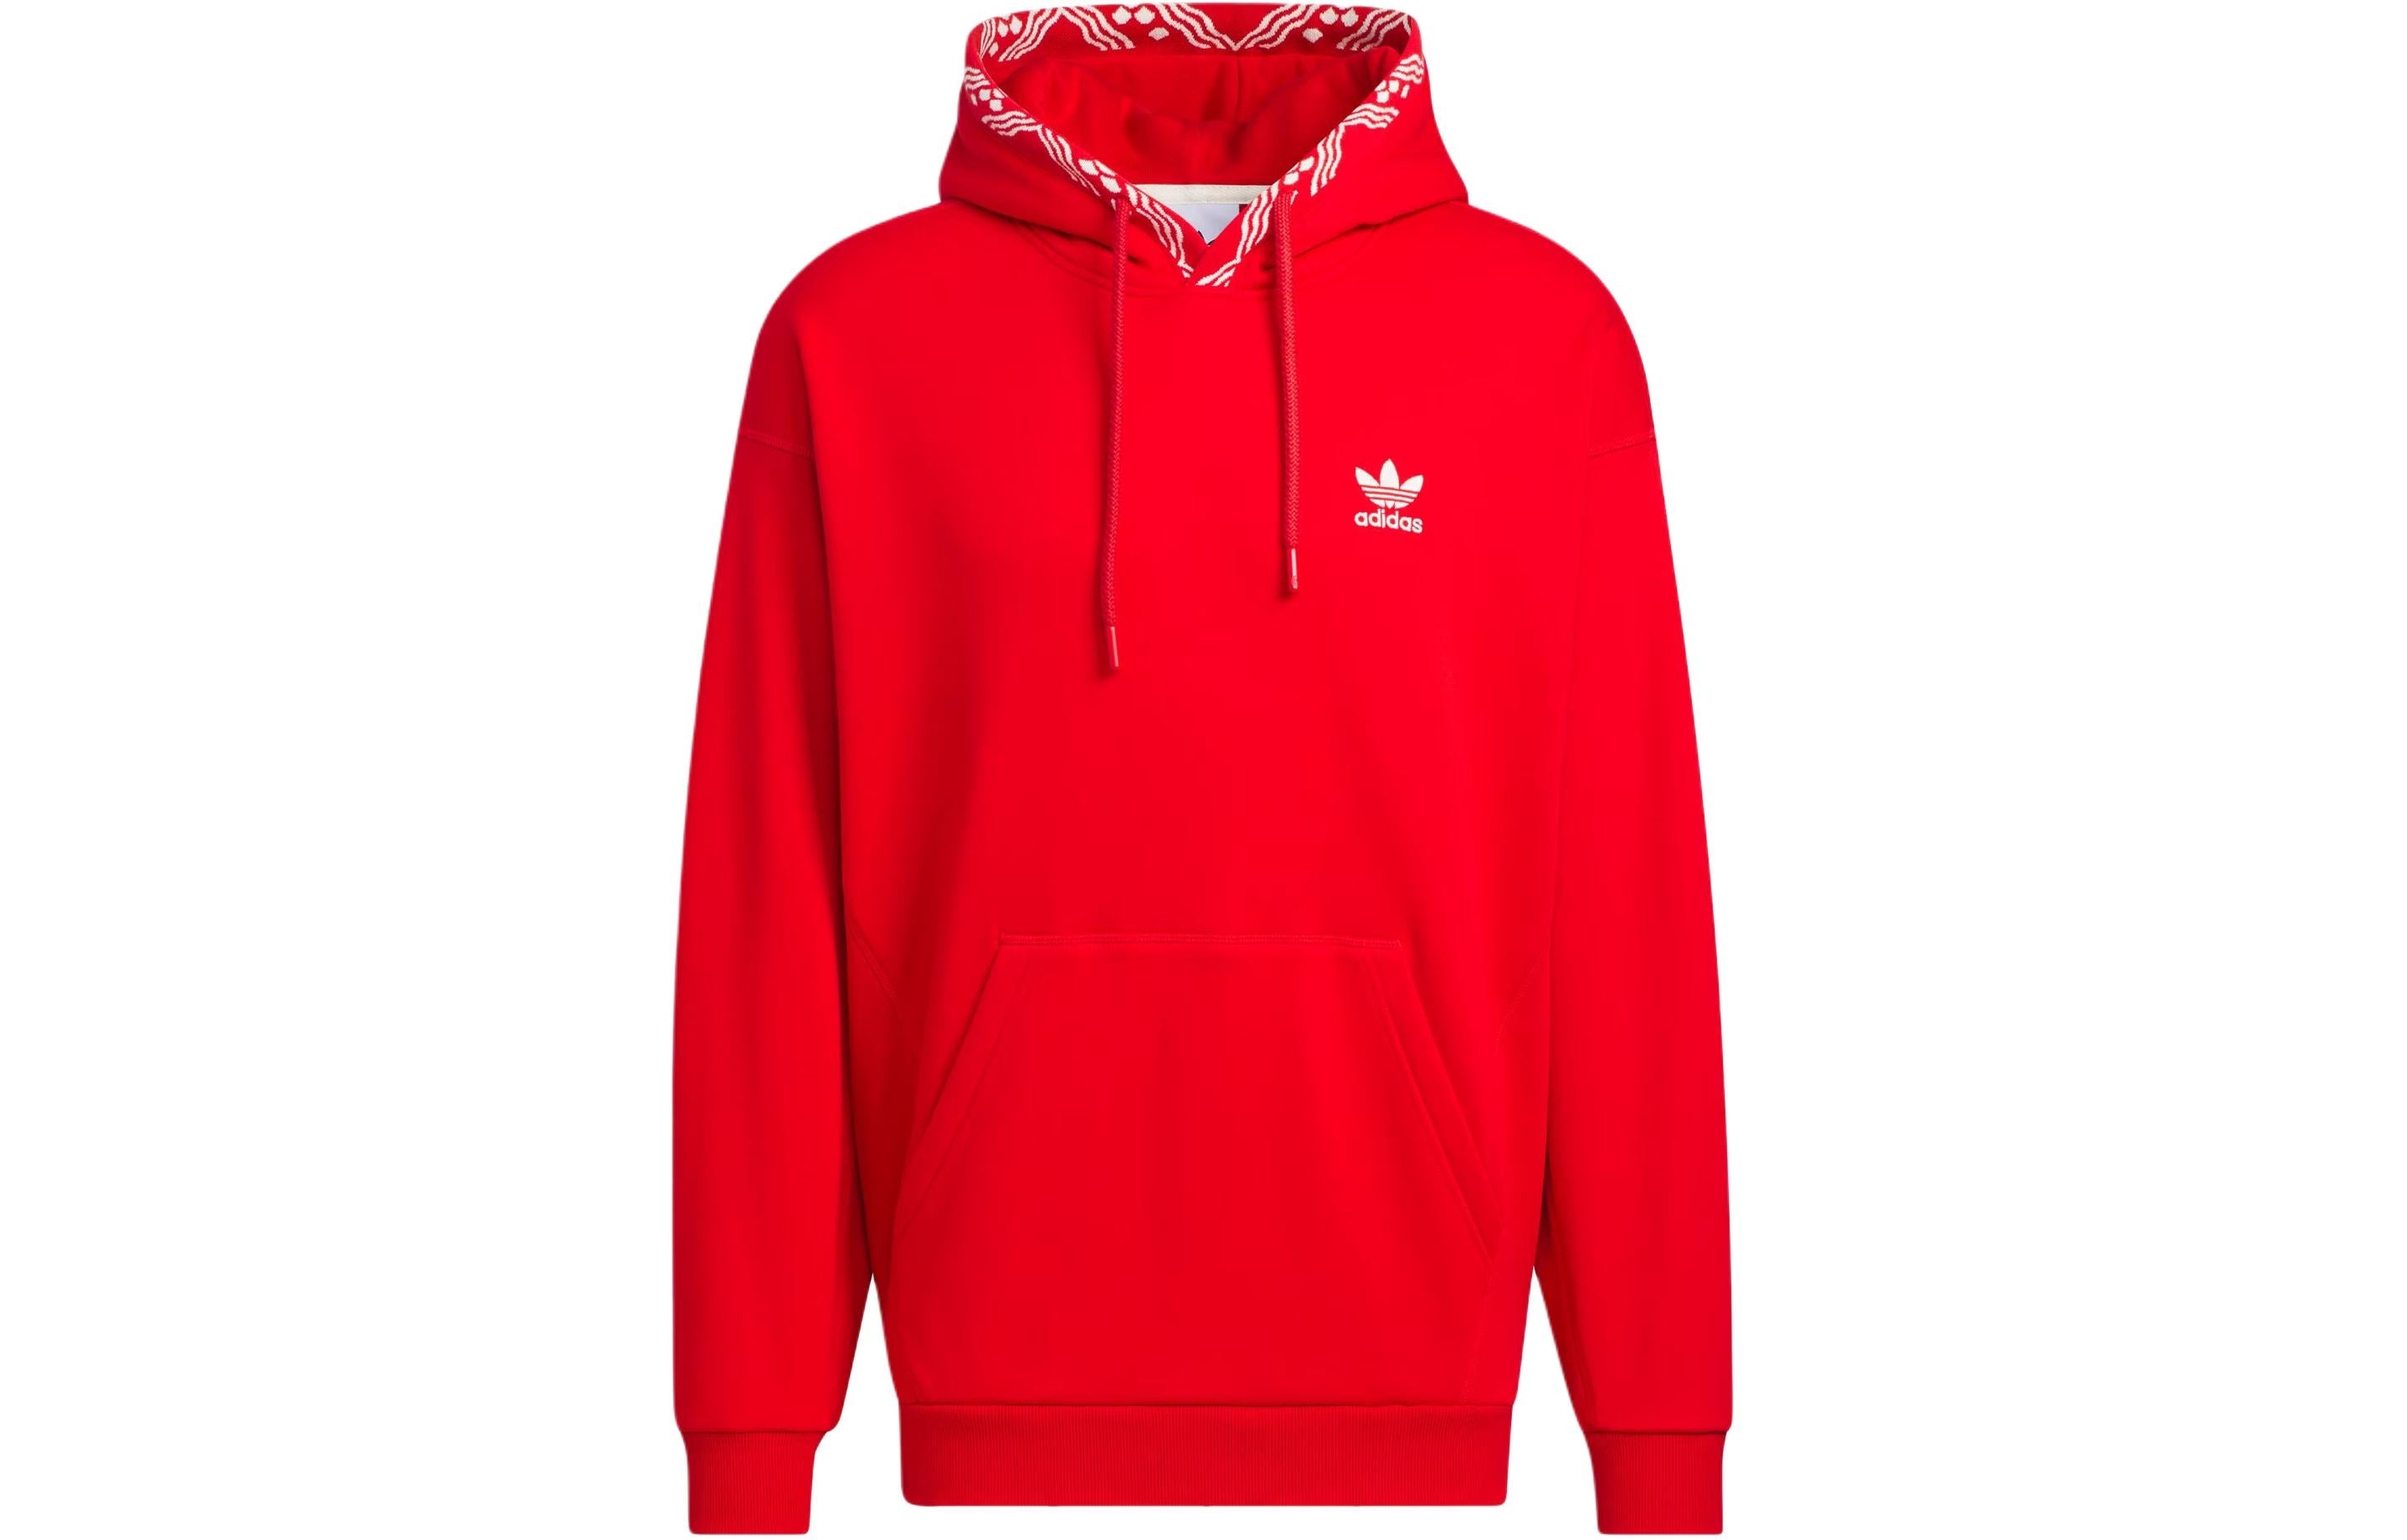 adidas Originals x Feifei Ruan Graphic Hoodies 'Red' IX4217 - 2